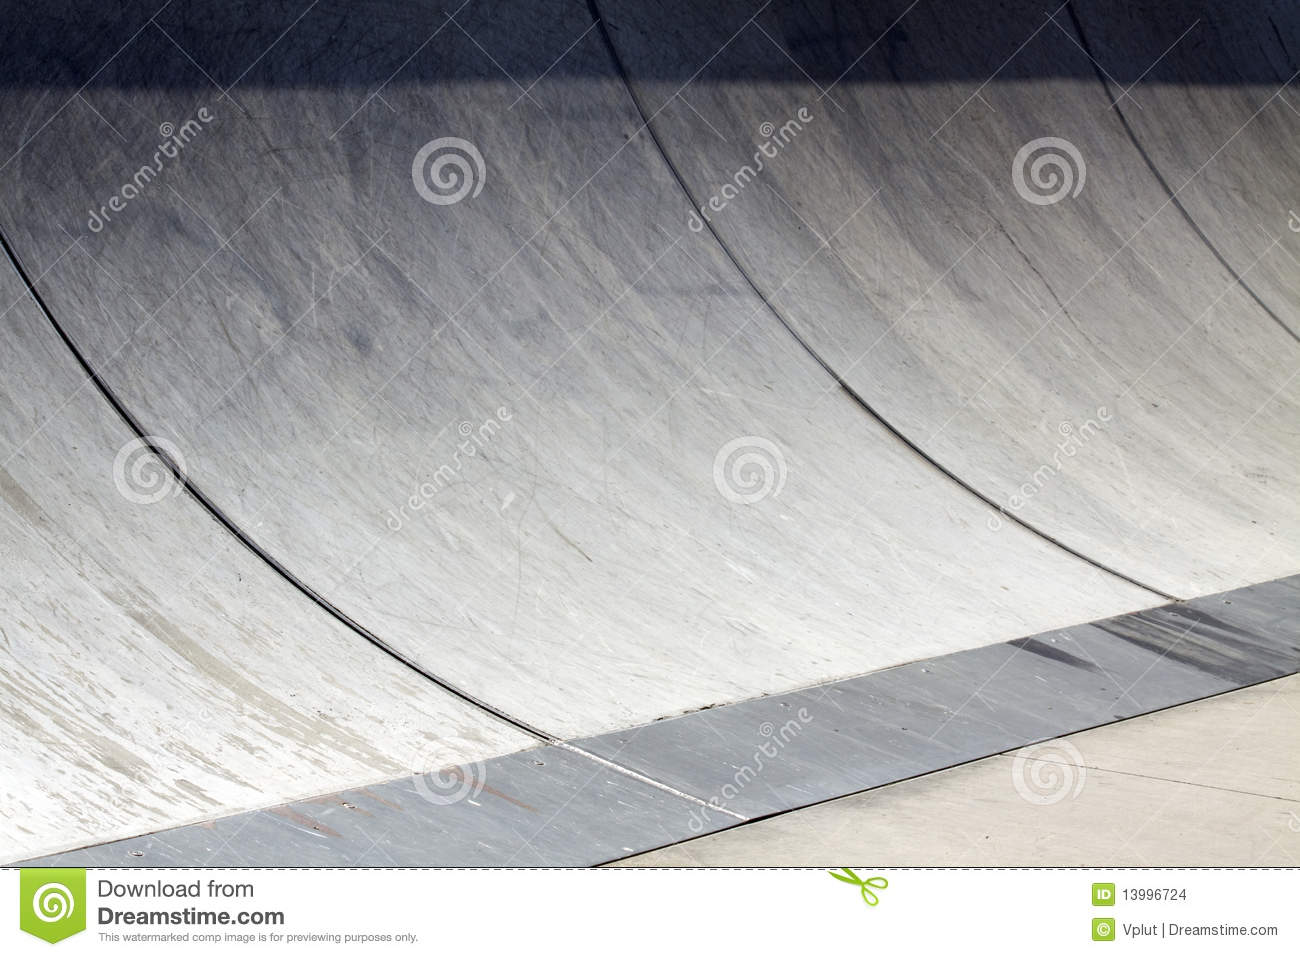 Skateboard Ramp  Stock Images   Image  13996724